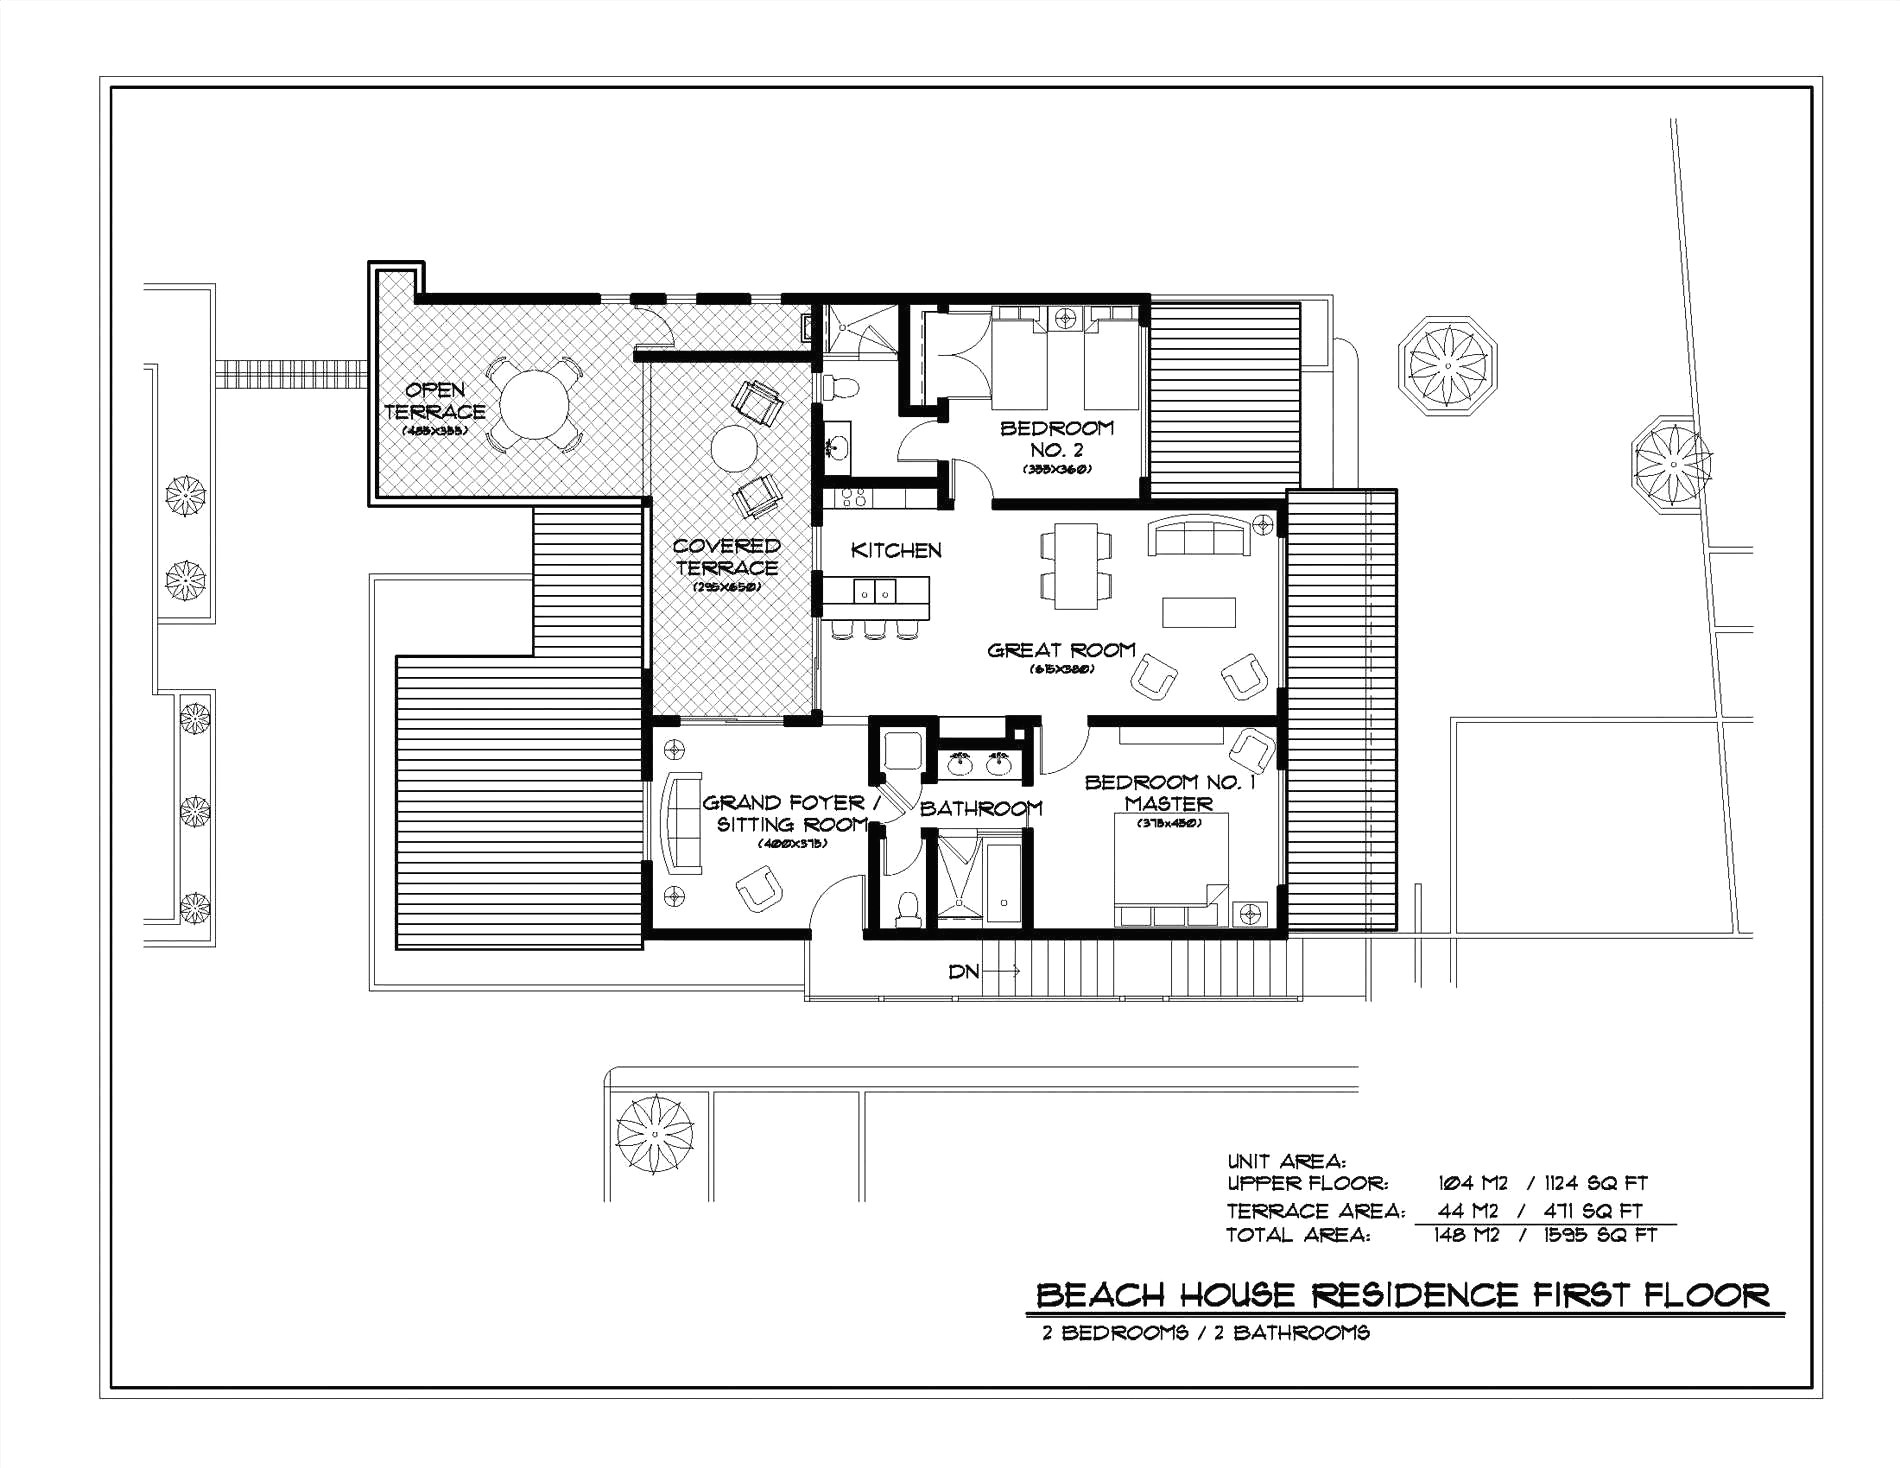 floor plan ideas beautiful purple martin house plans new bird house plans cool houseplans 0d